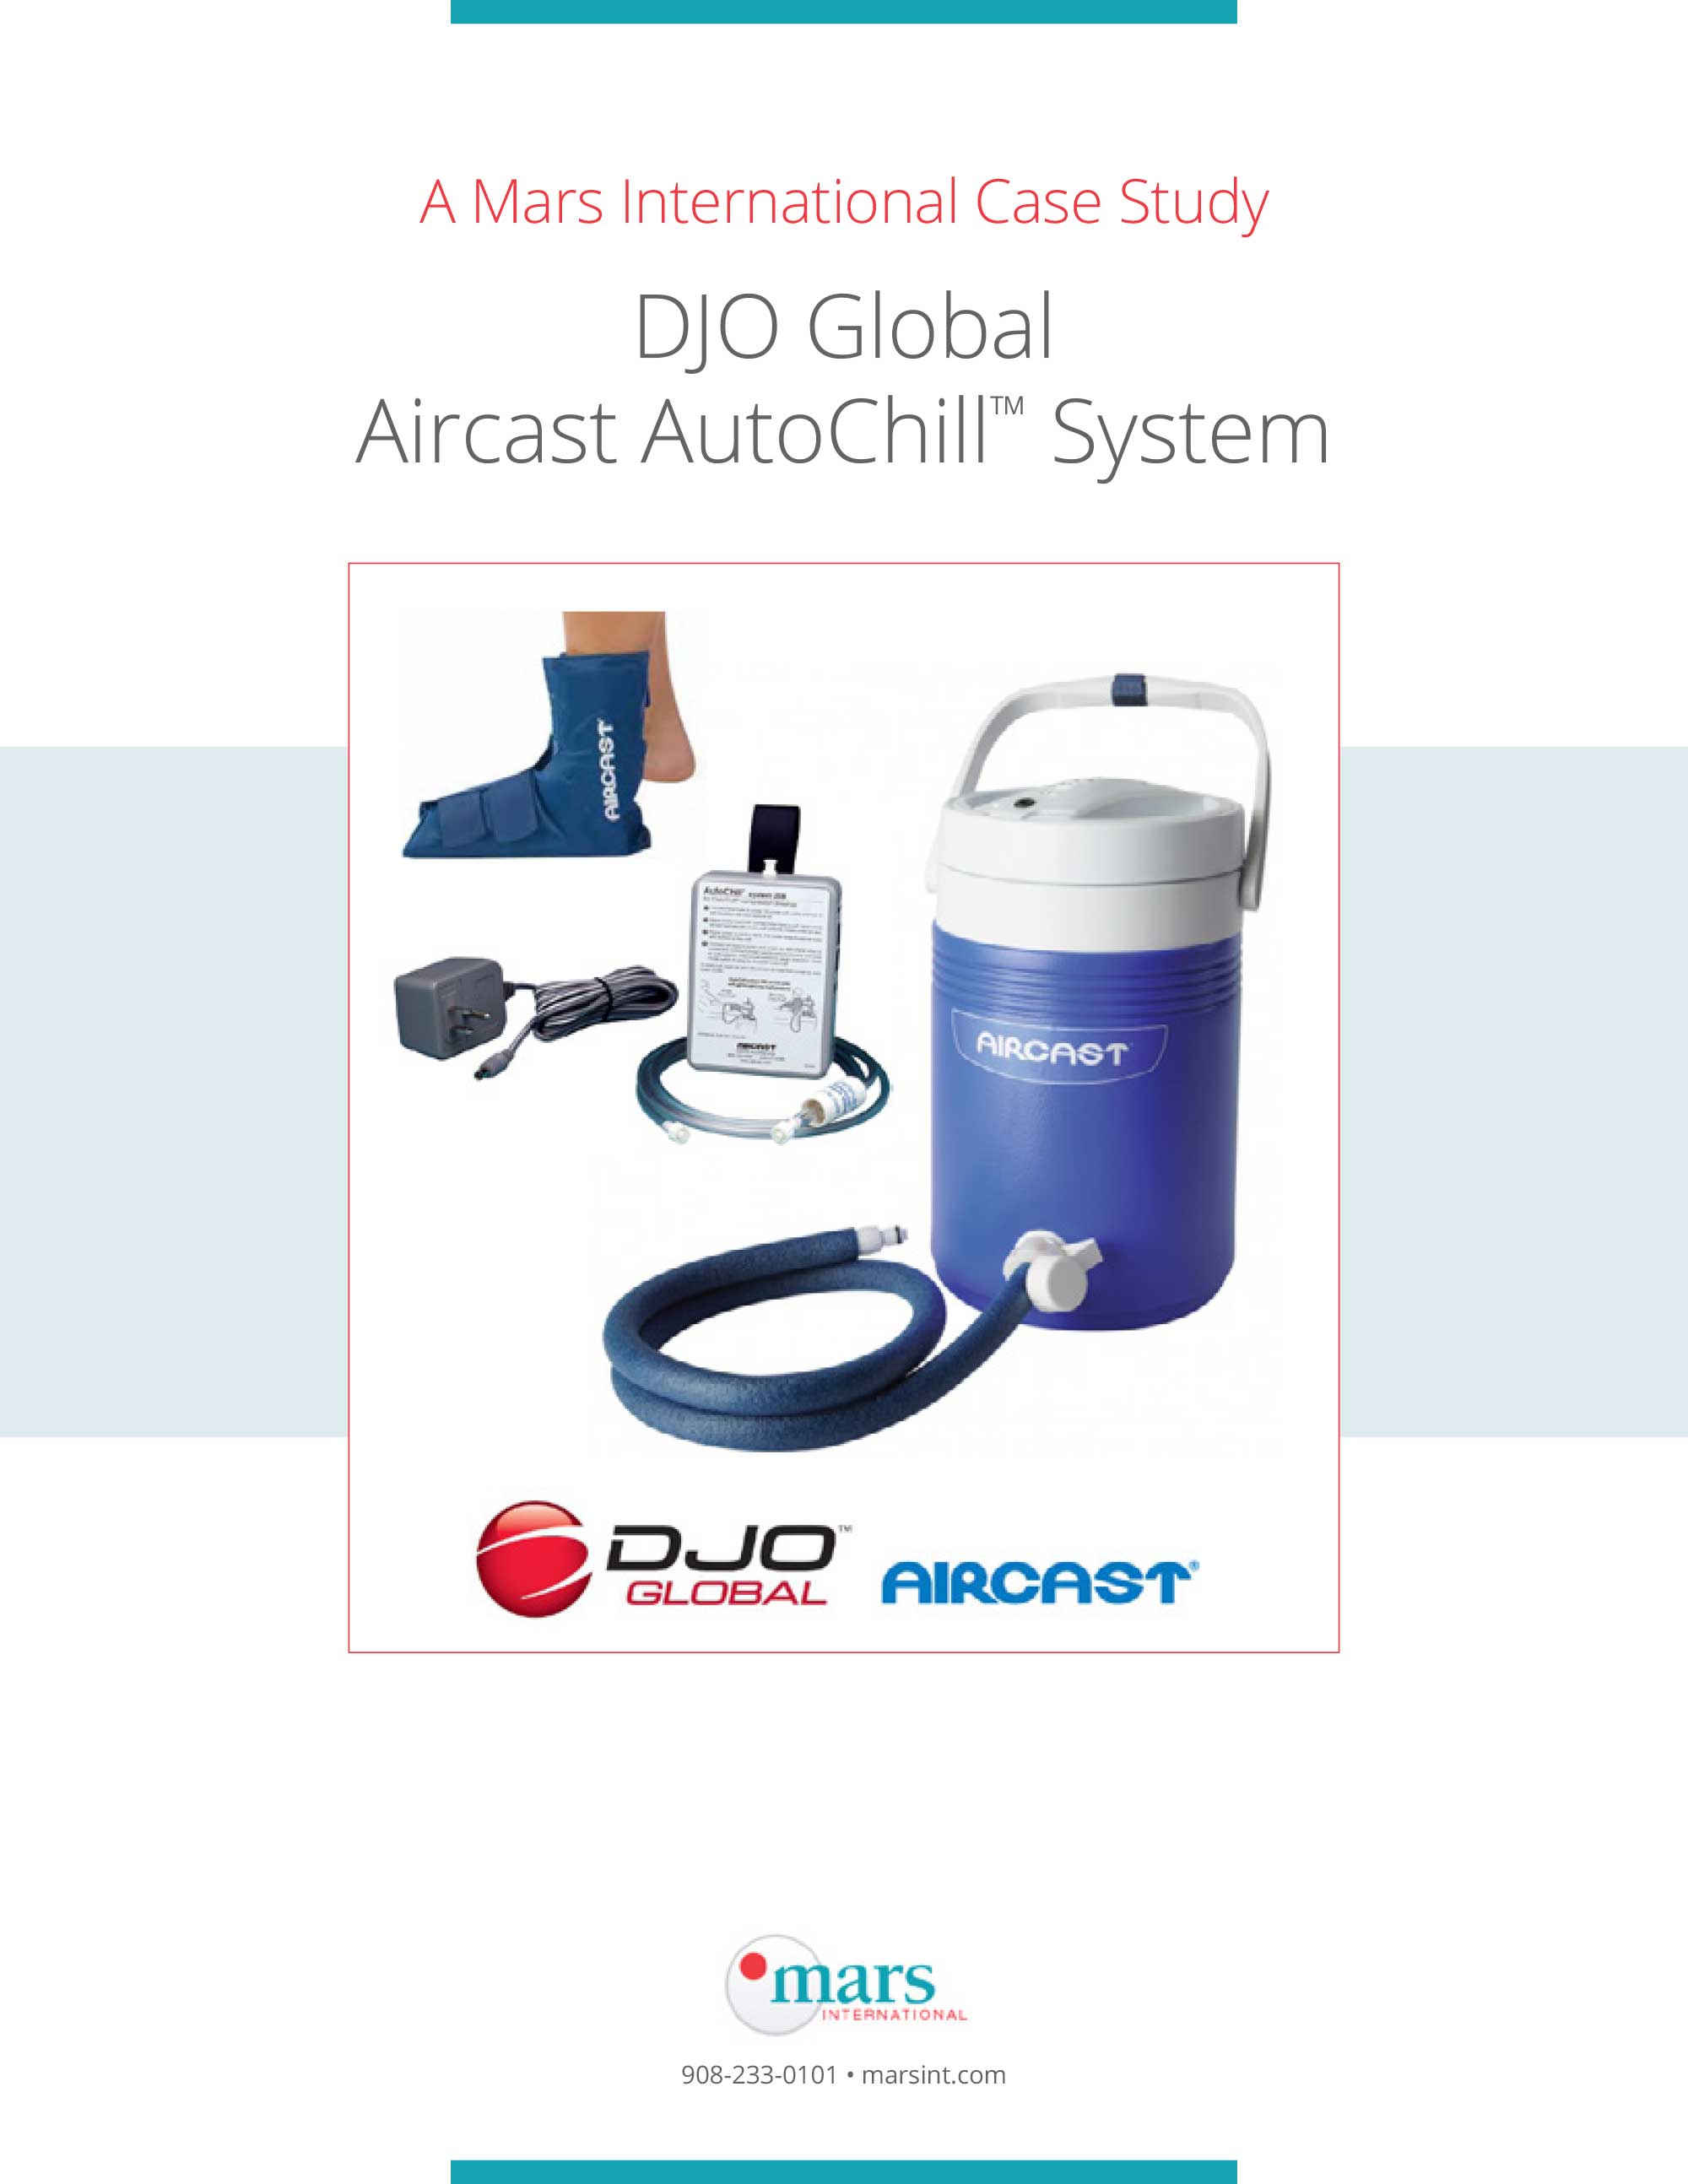 DJO_Global_AirCast_AutoChill_System-1-1.jpg